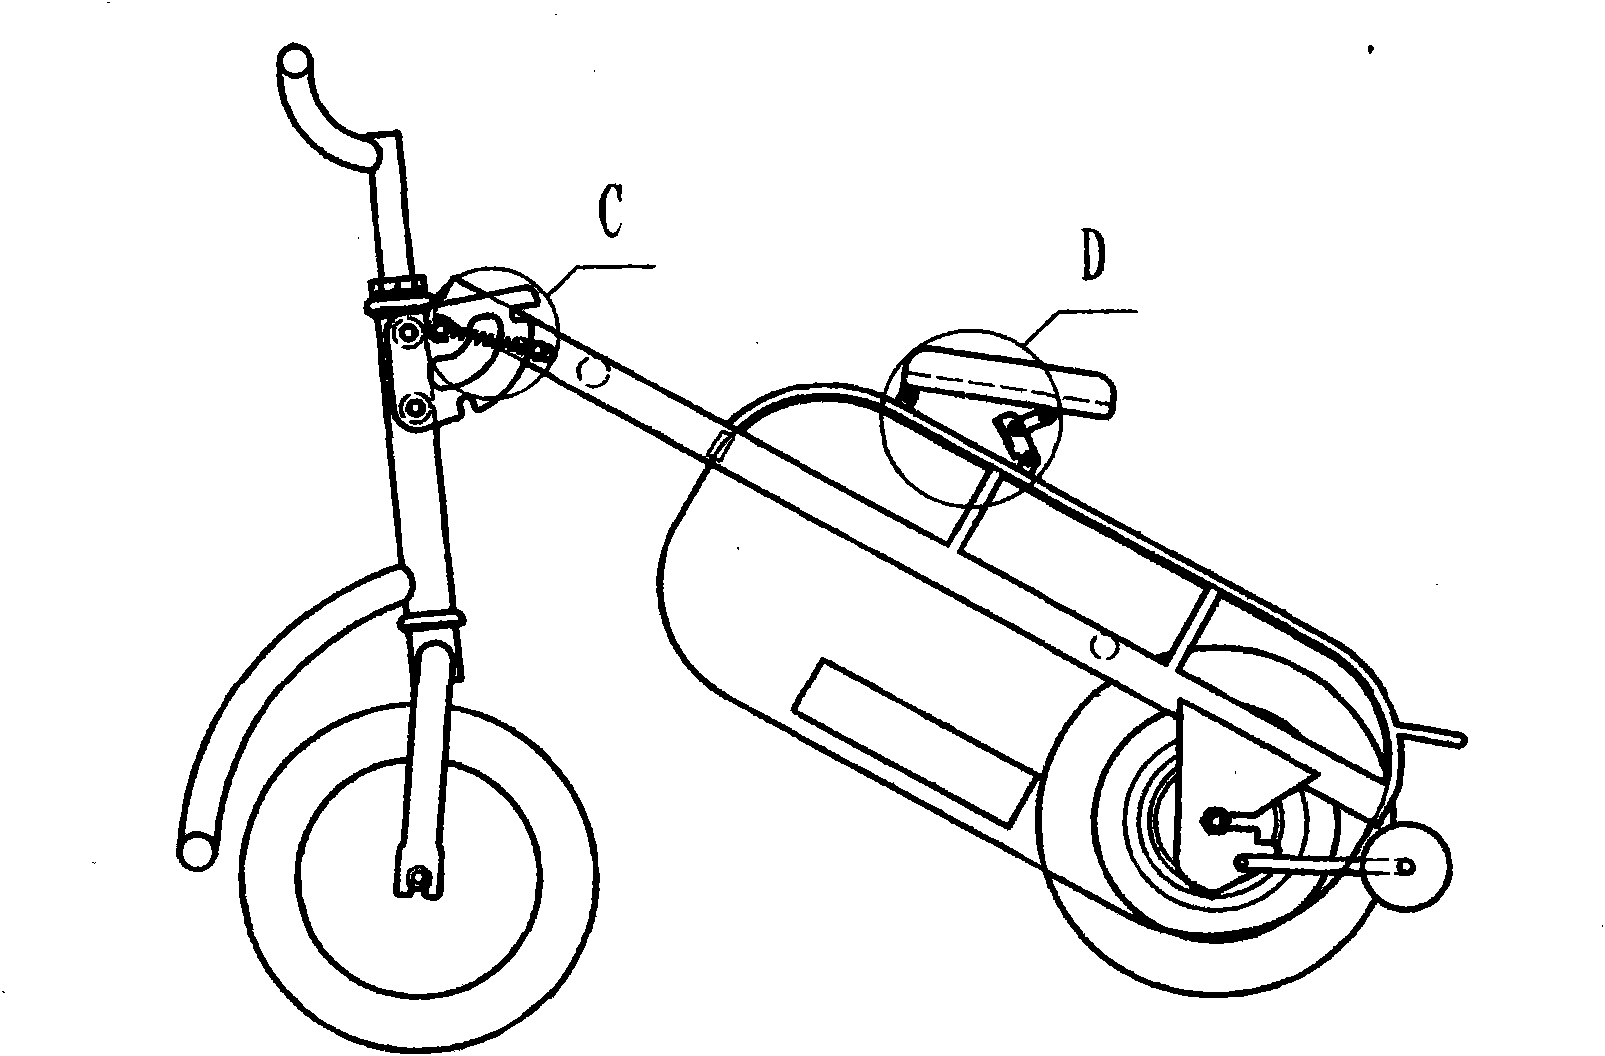 Draw-bar box type electric vehicle